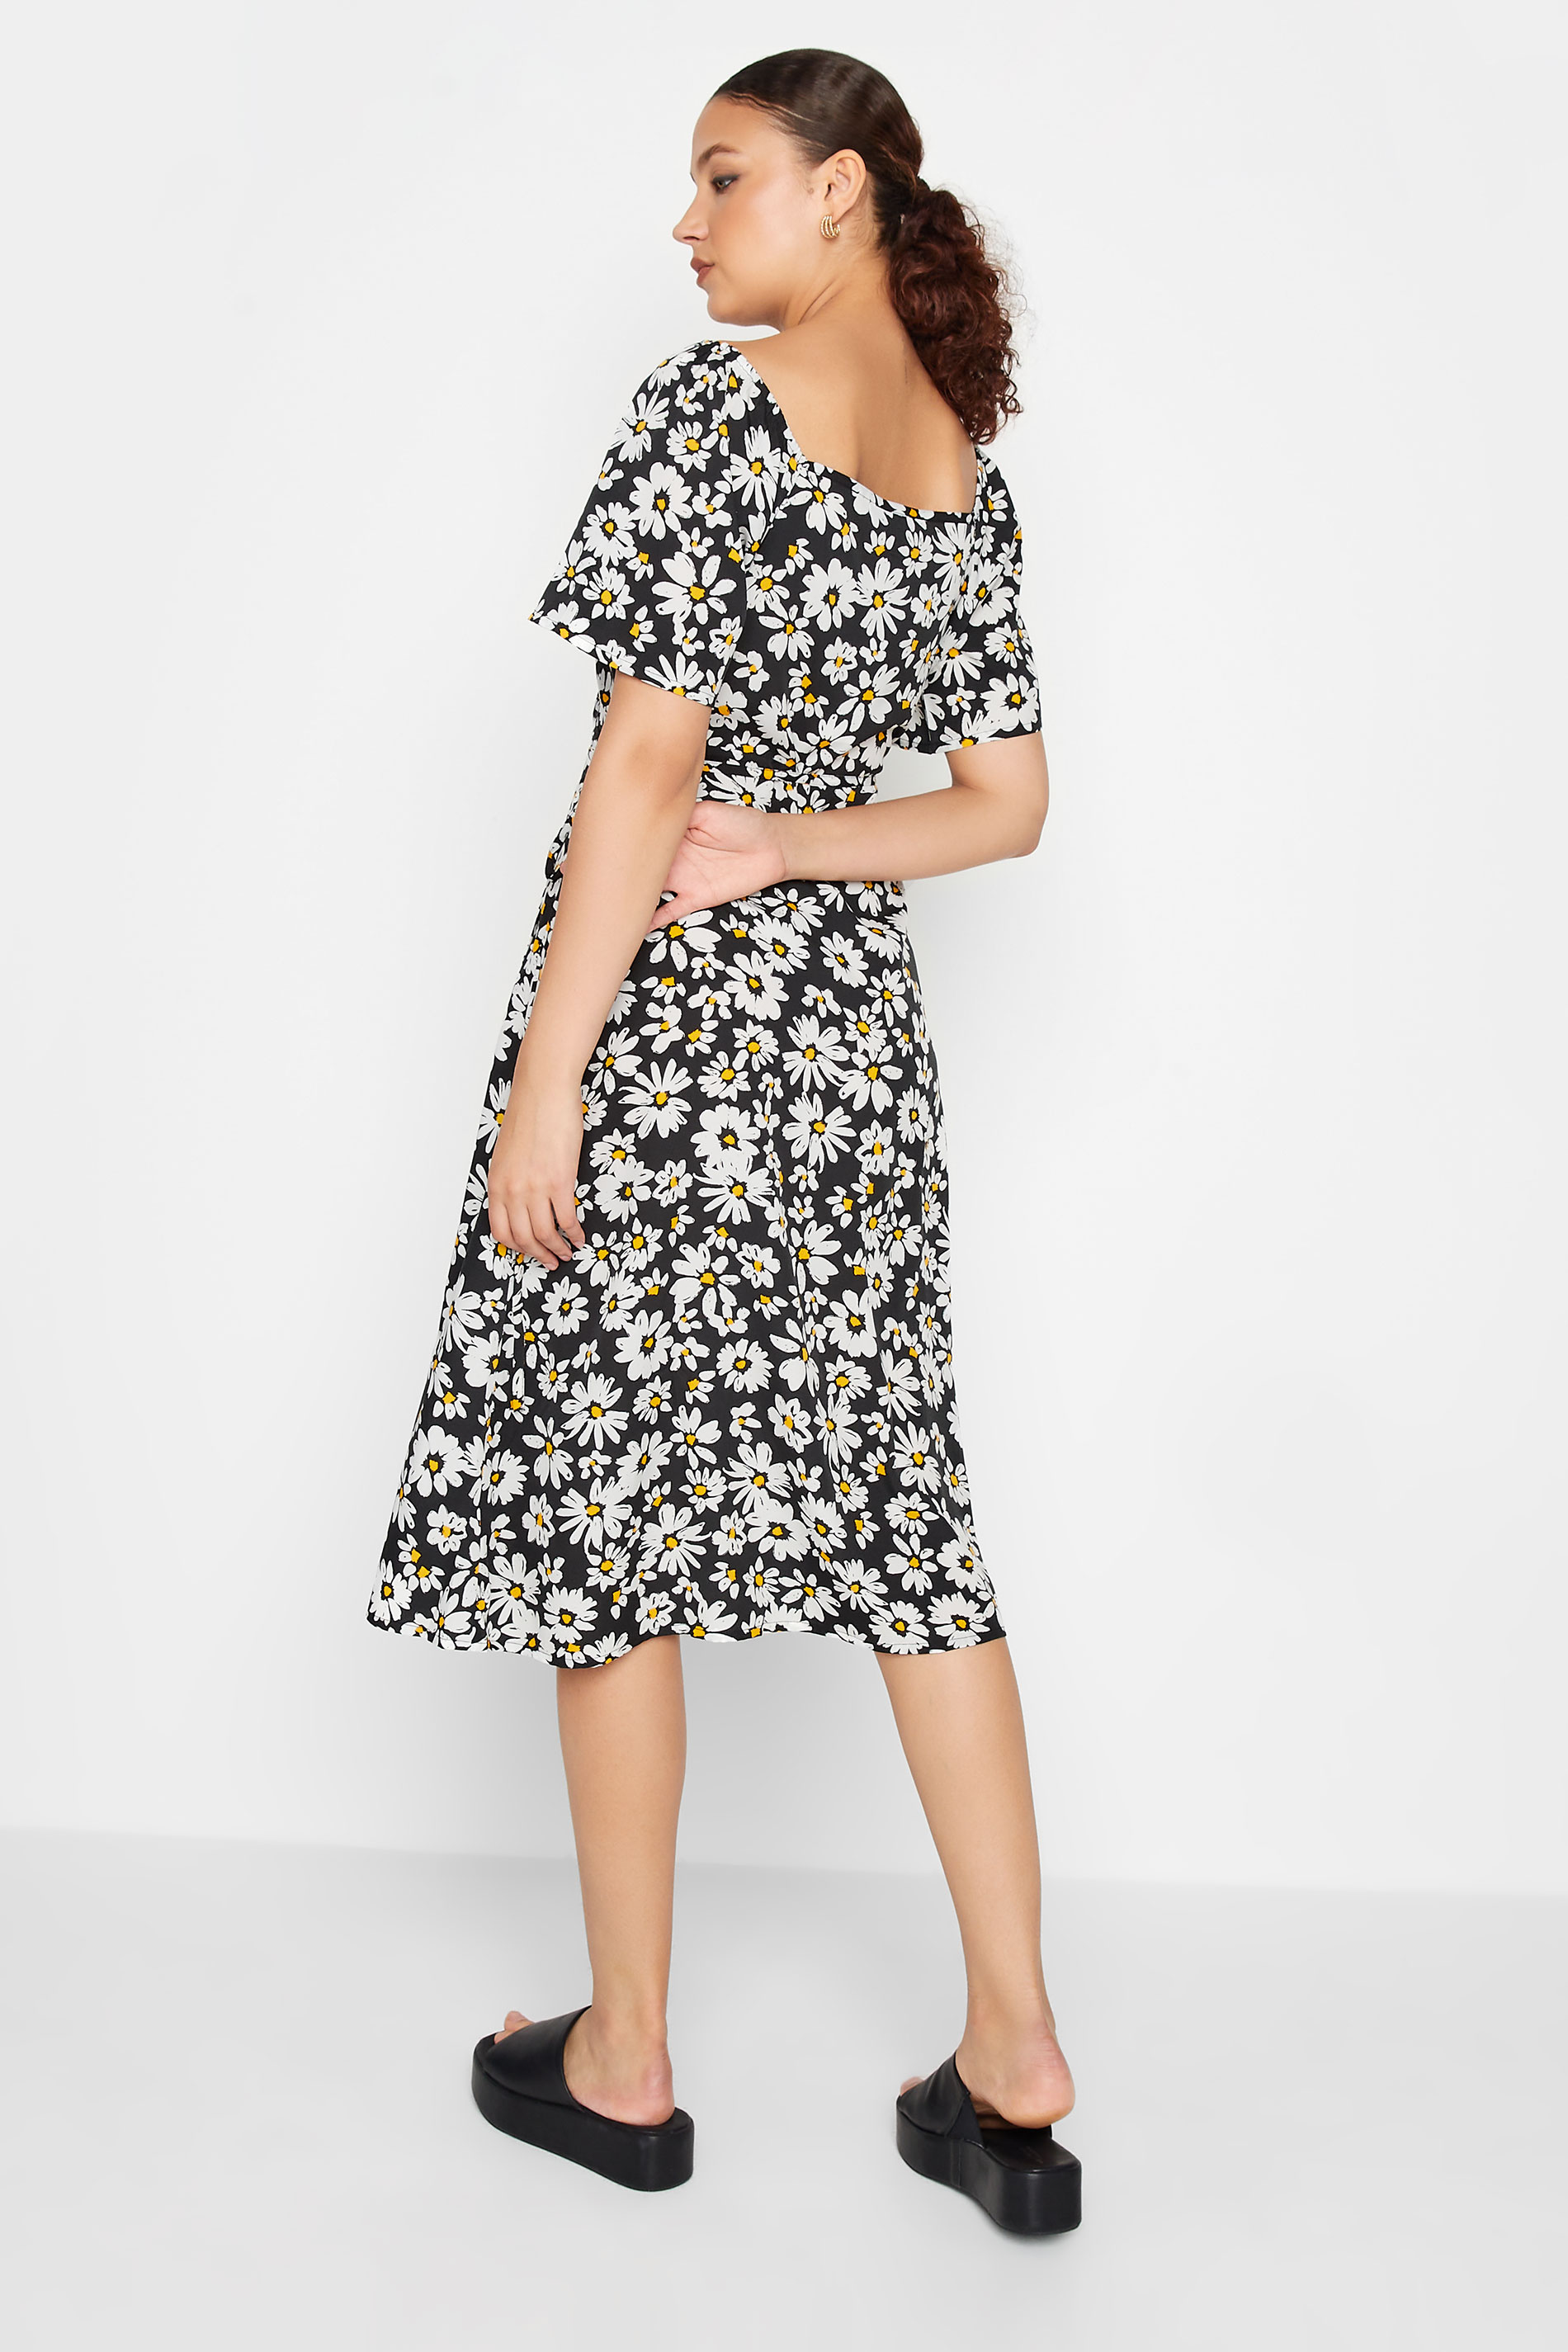 LTS Tall Women's Black Daisy Print Wrap Dress | Long Tall Sally 3